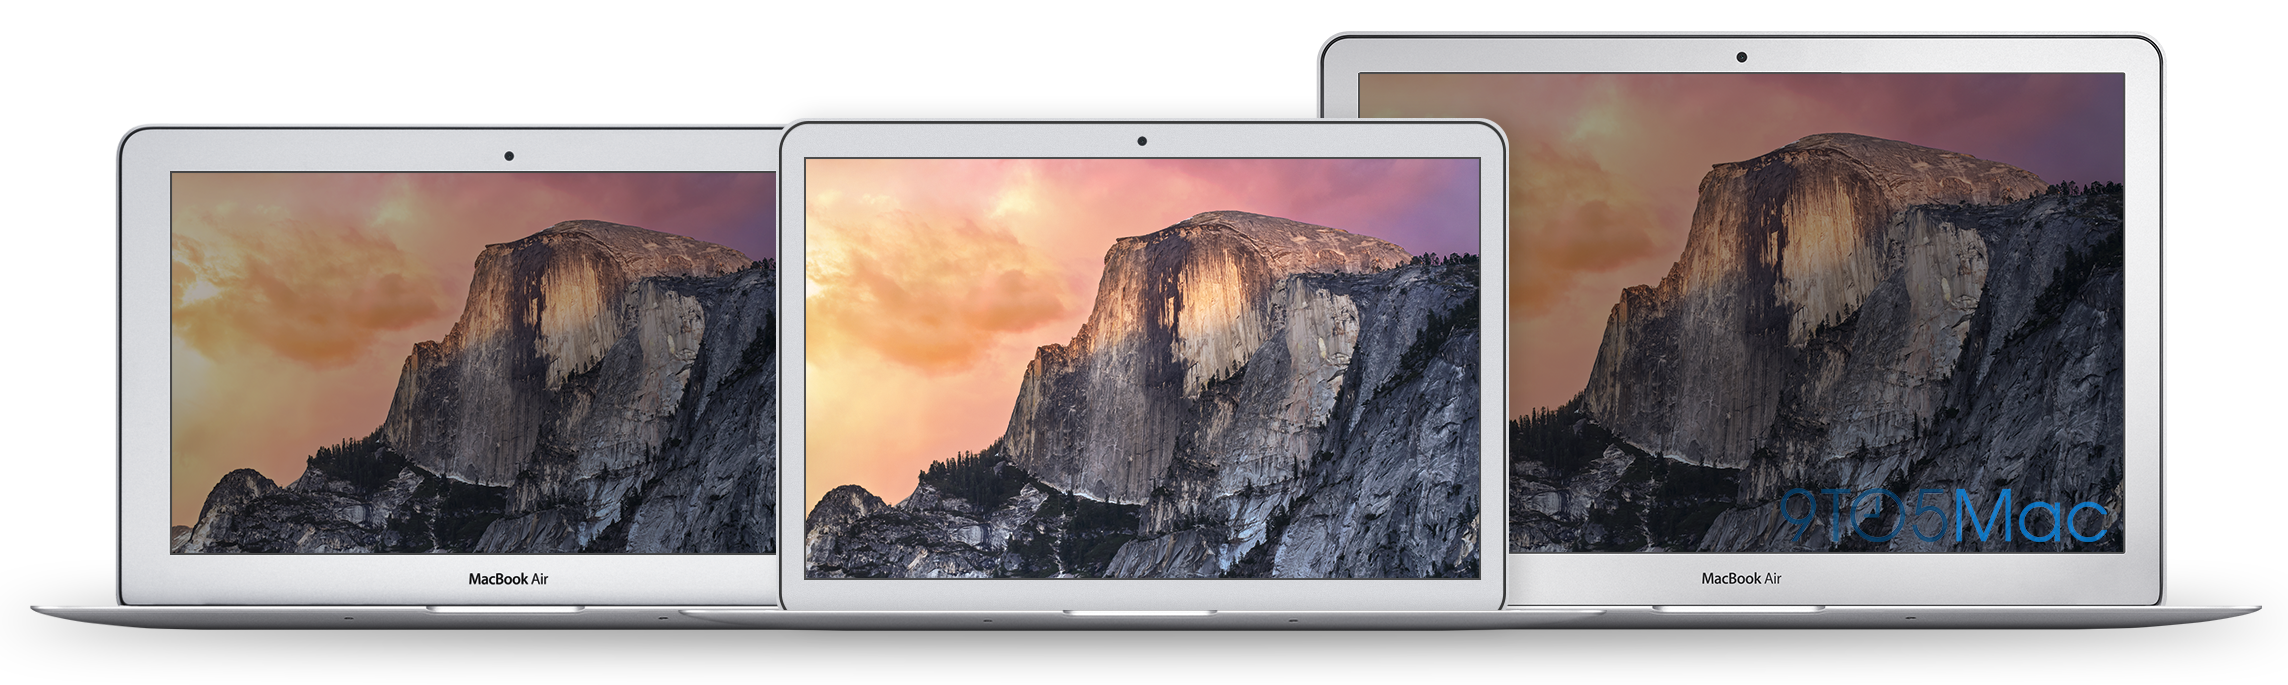 Apple's next major Mac revealed: the radically new 12-inch MacBook 